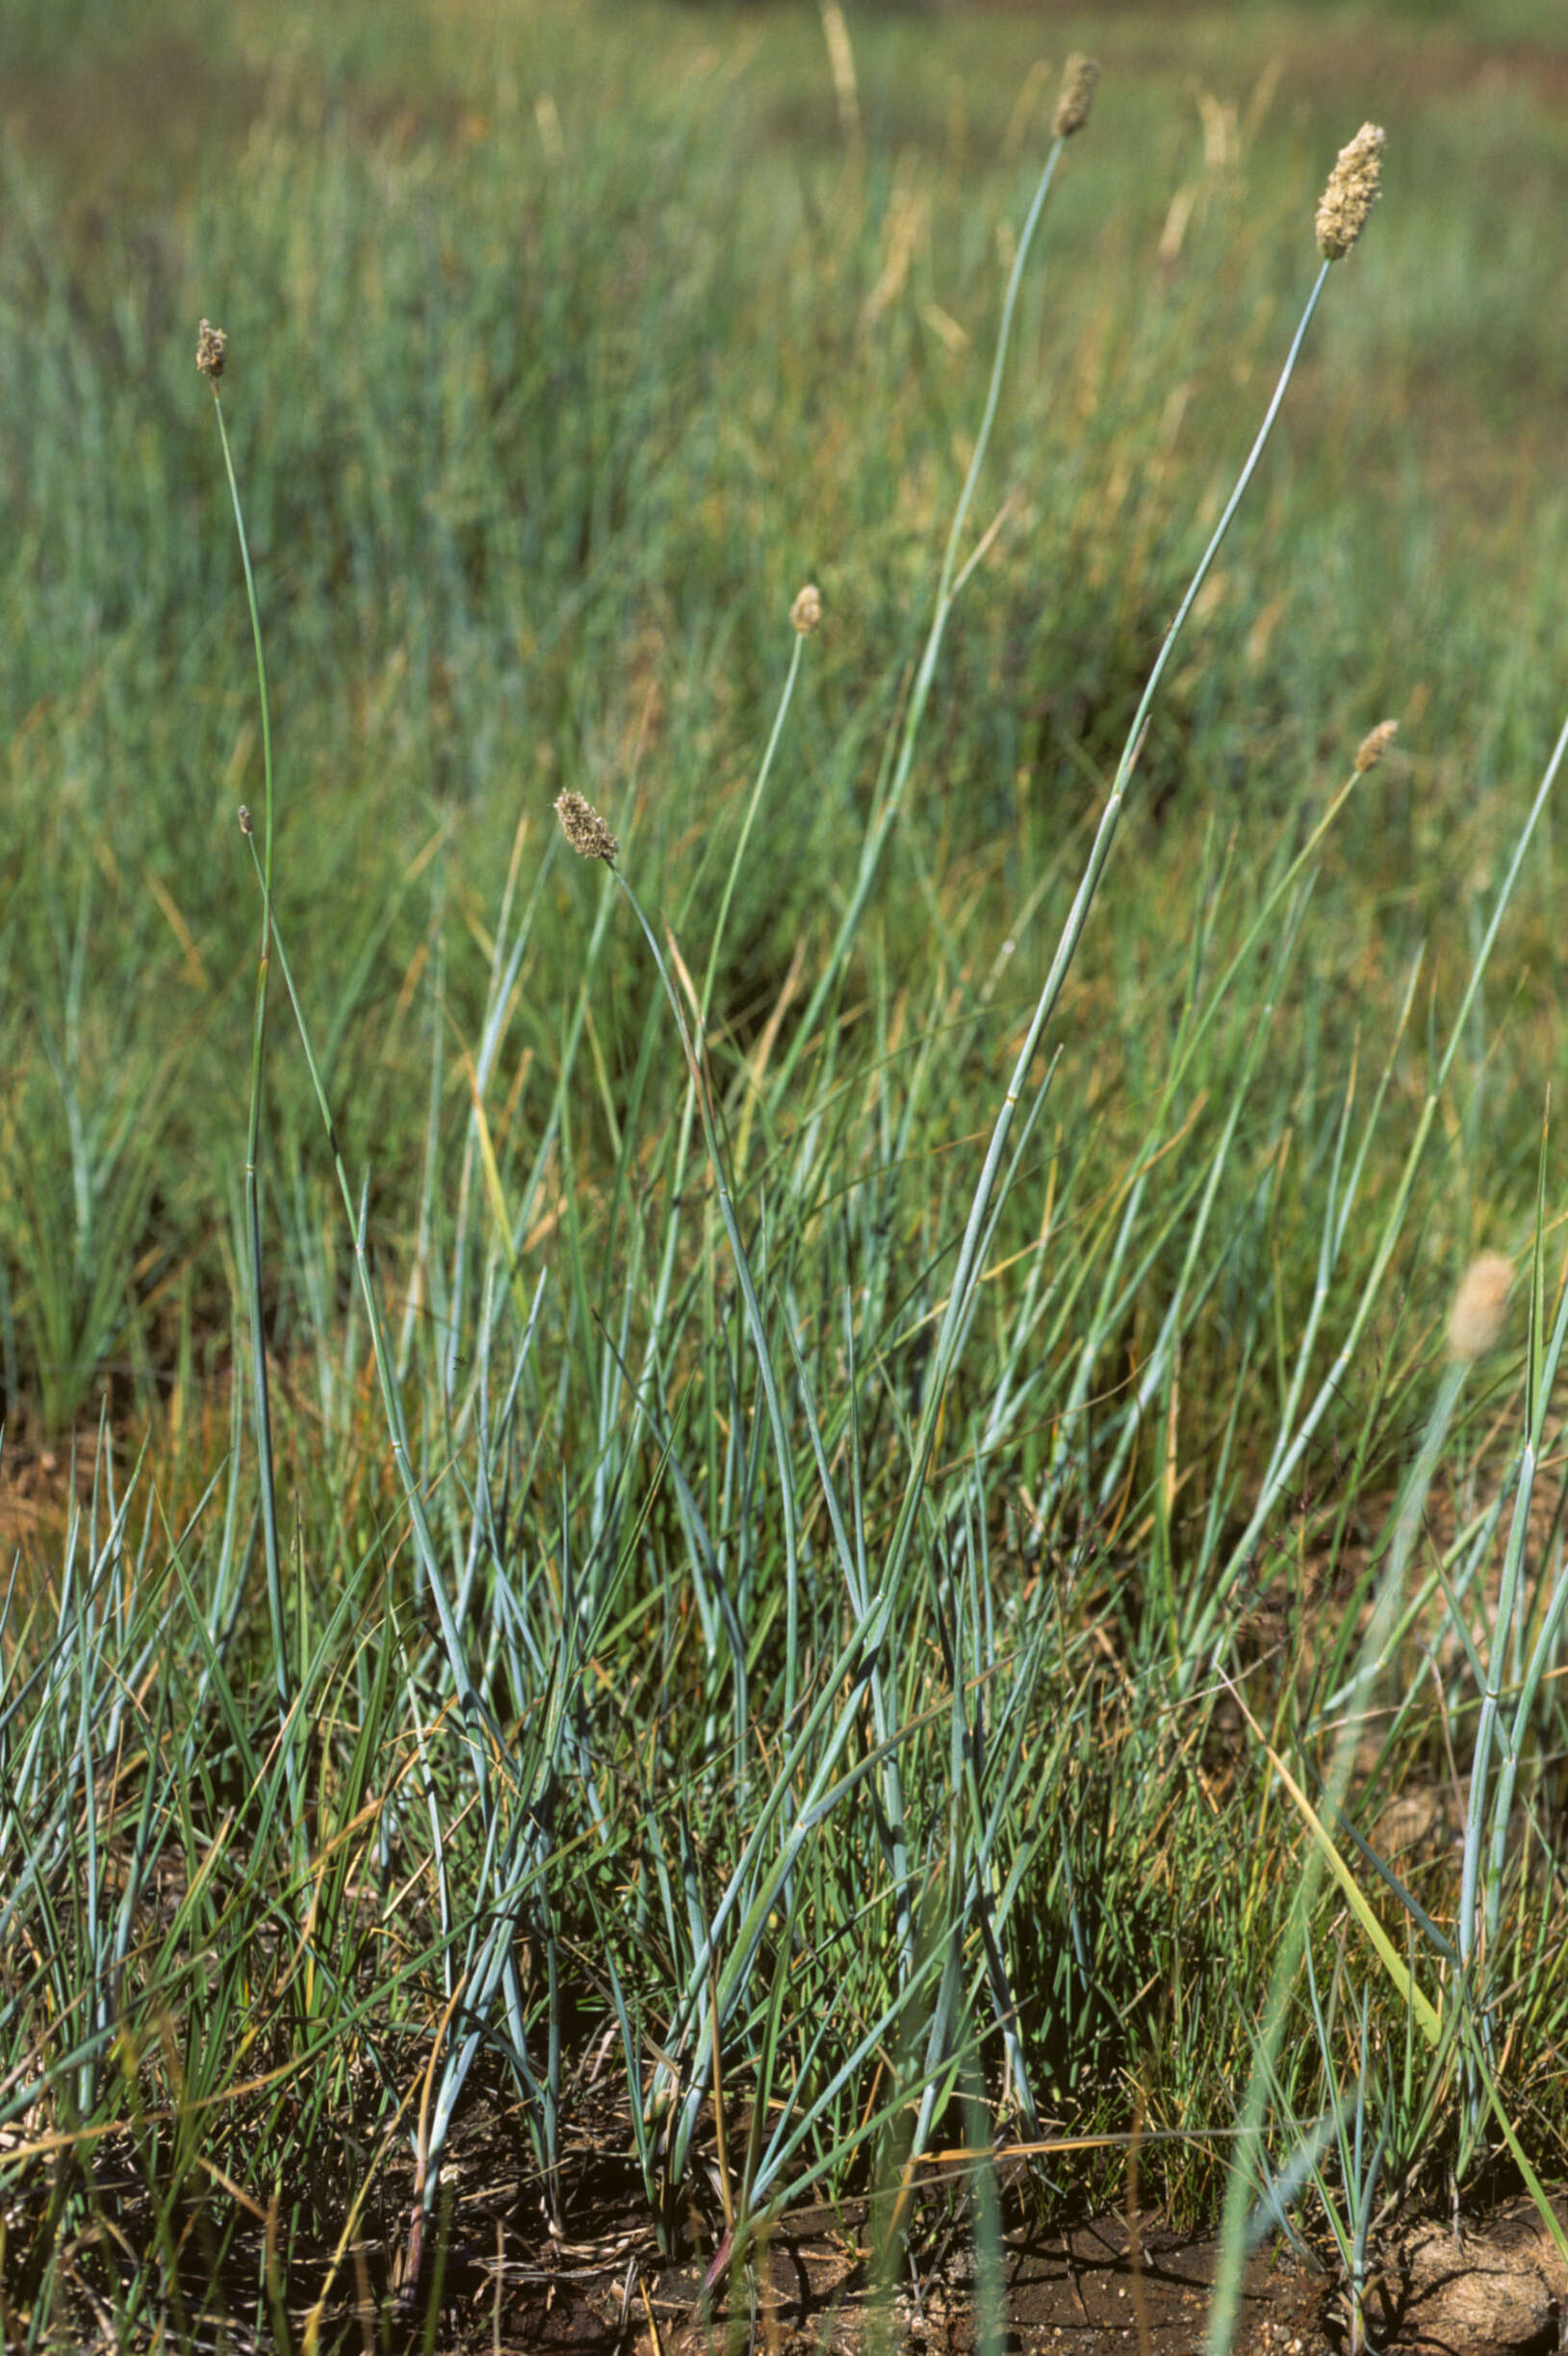 Image of Alpine Foxtail